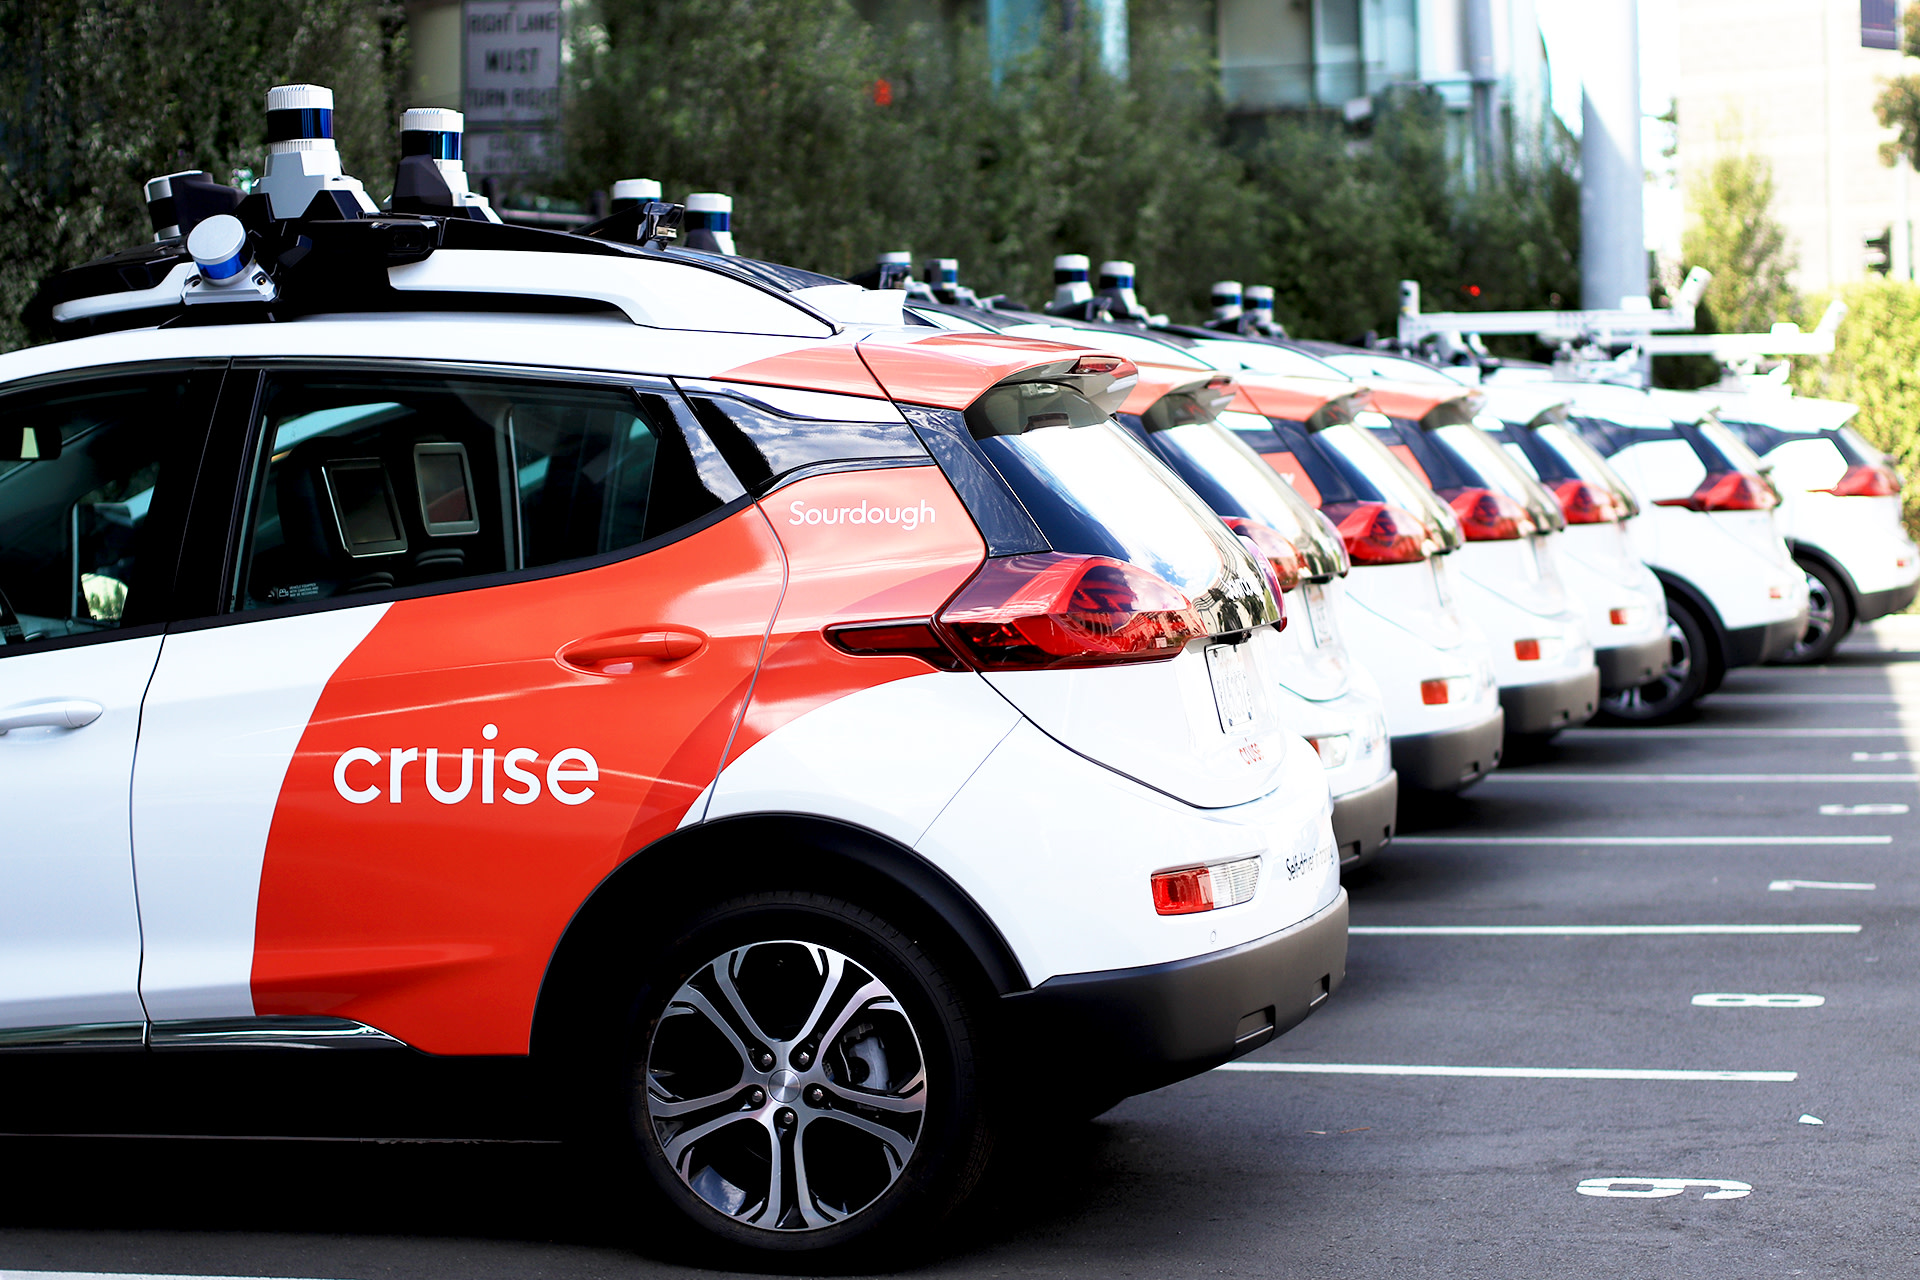 Fleet of Cruise driverless cars